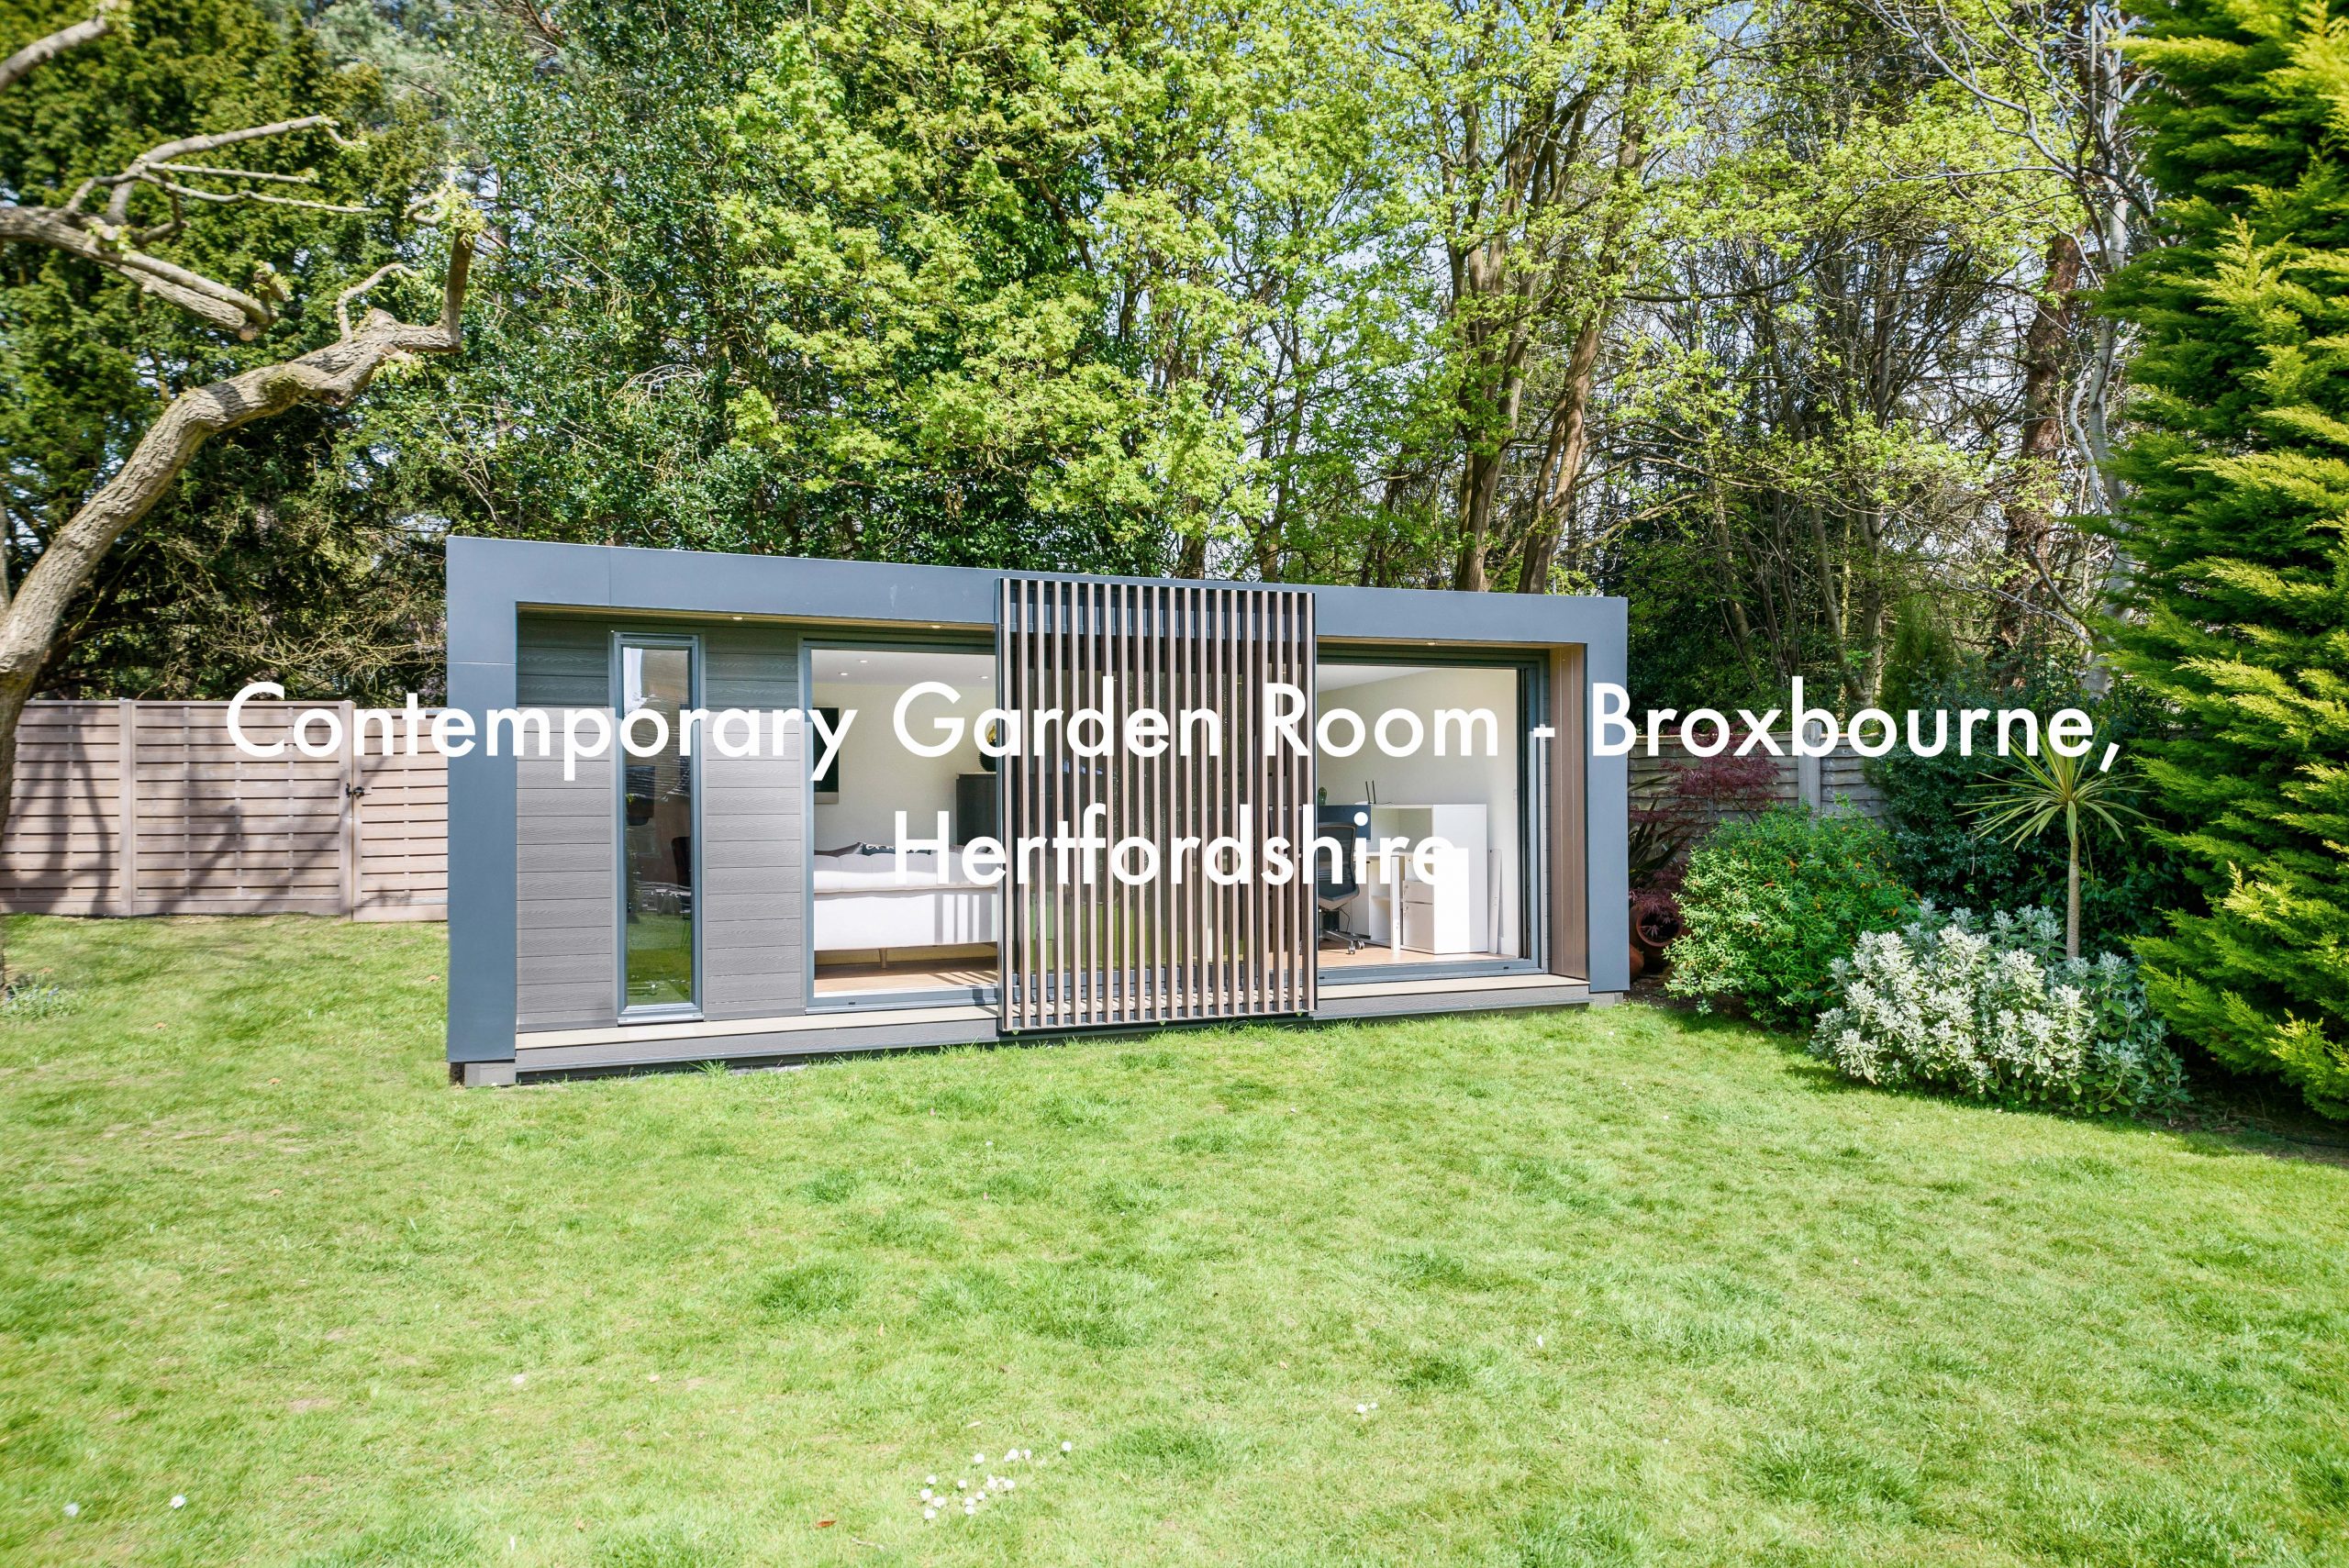 Contemporary Garden Room Hertfordshire